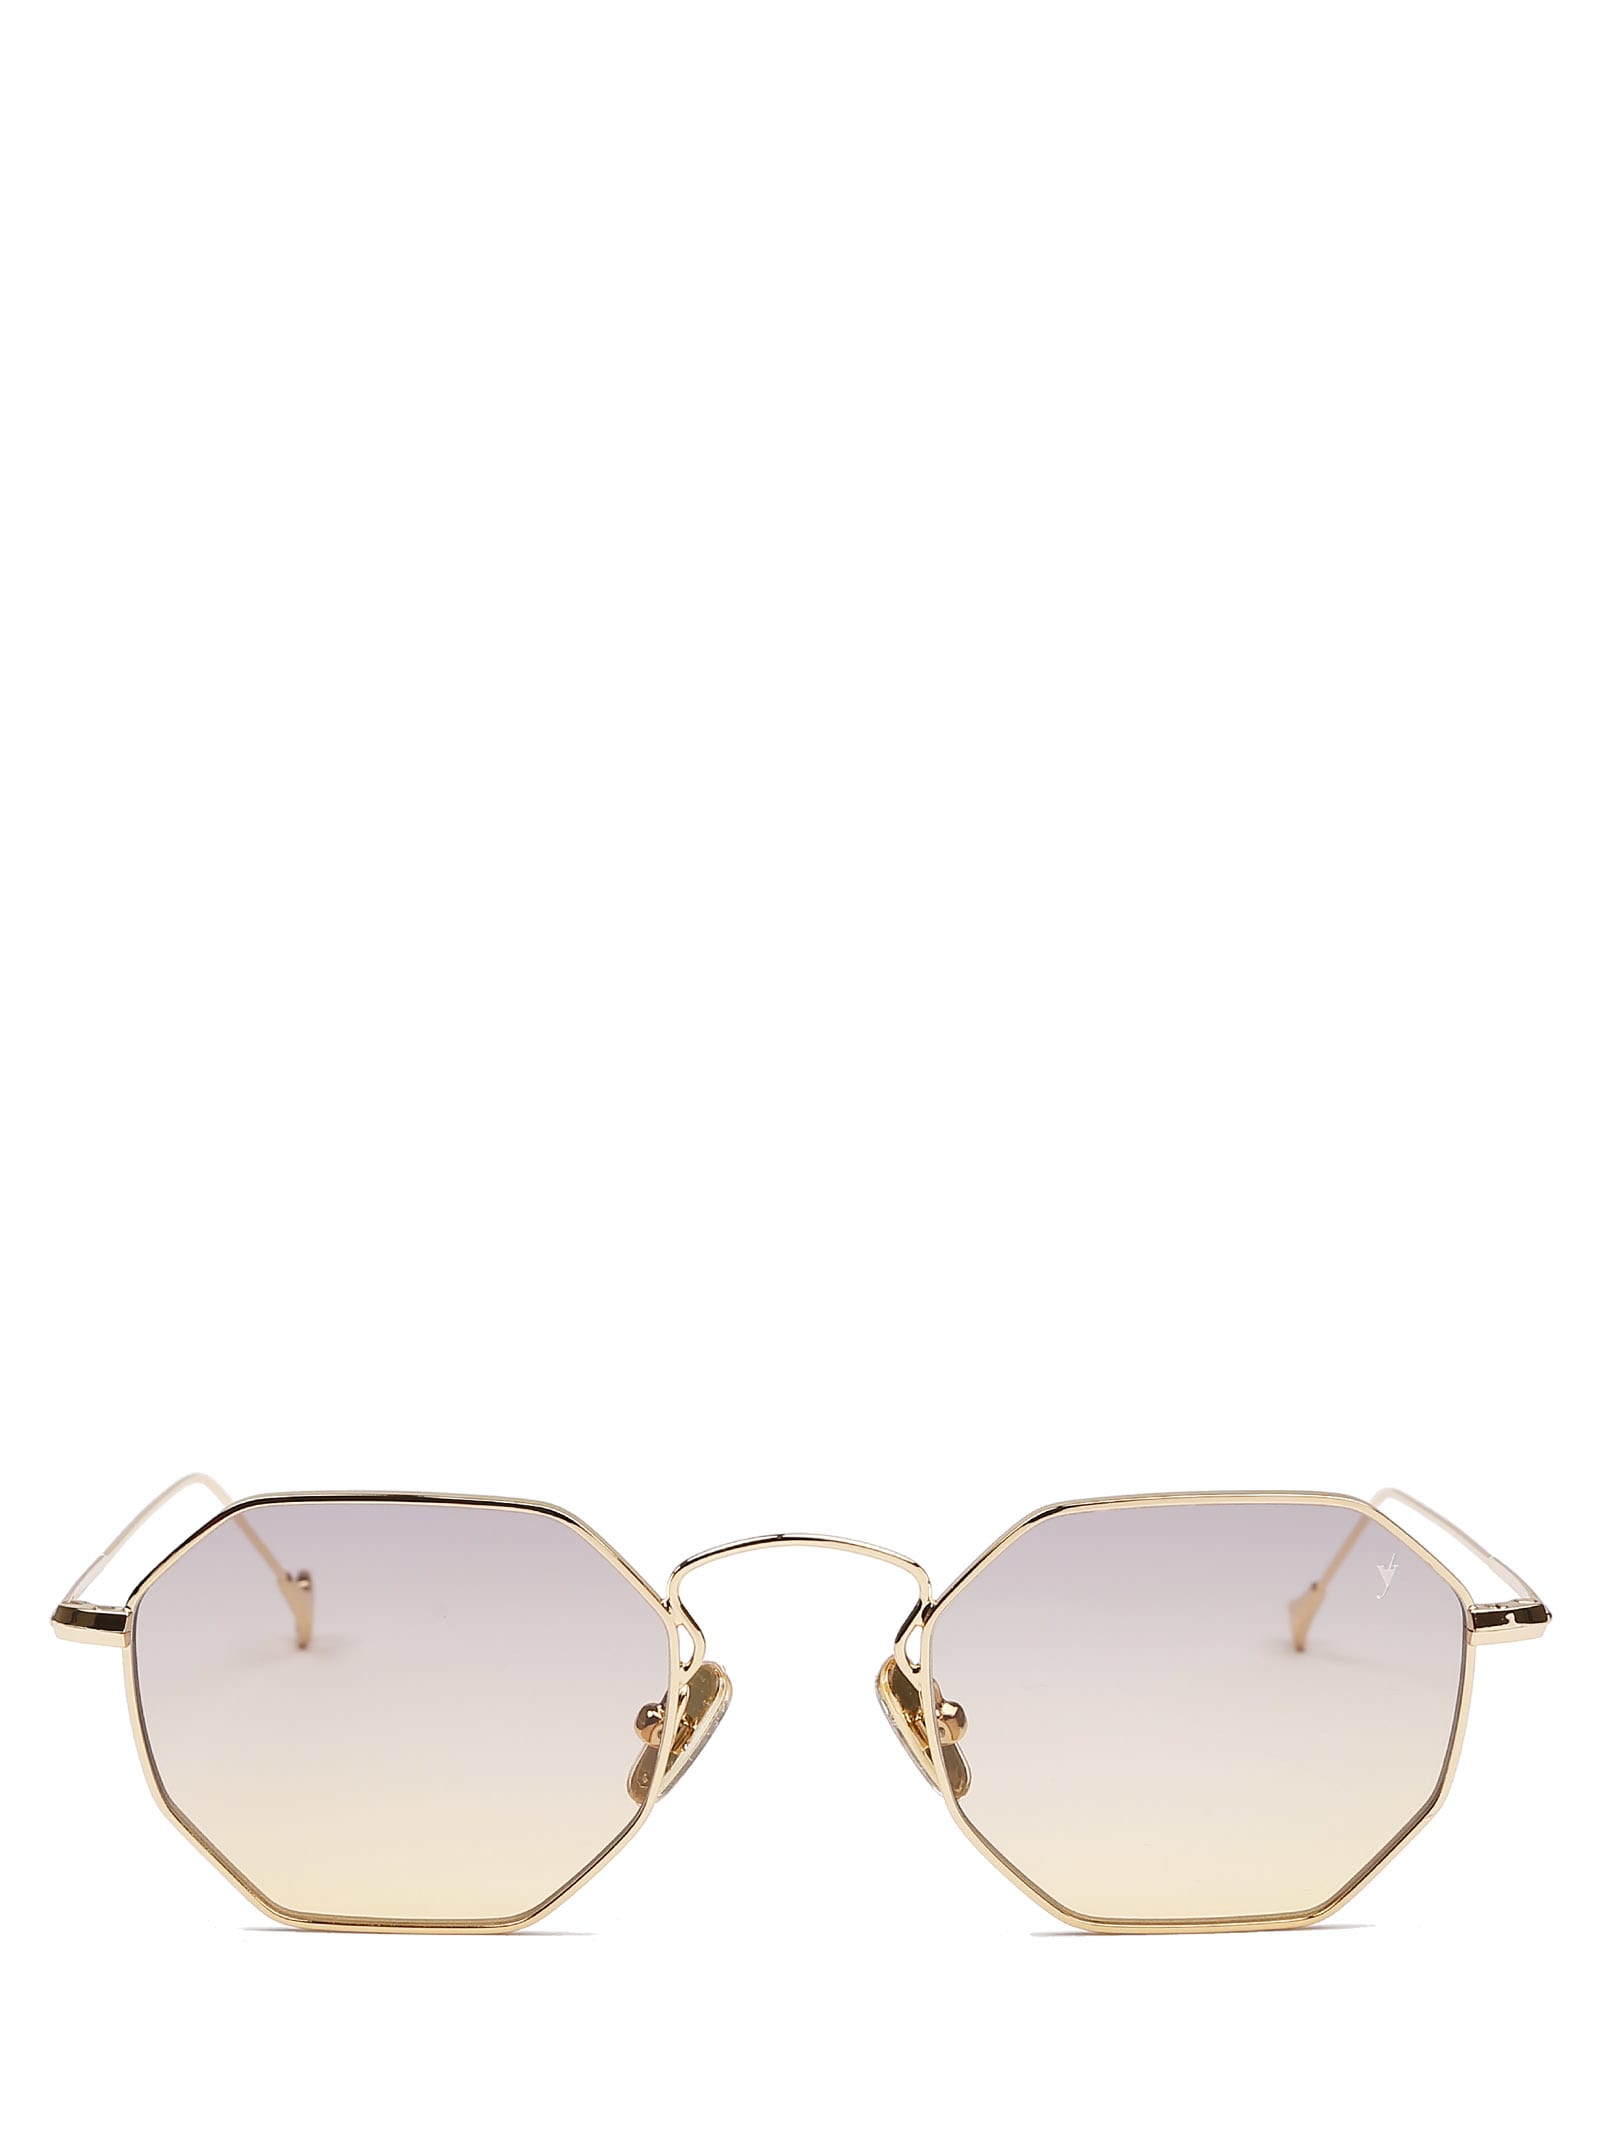 Shop Eyepetizer Claire Gold Sunglasses